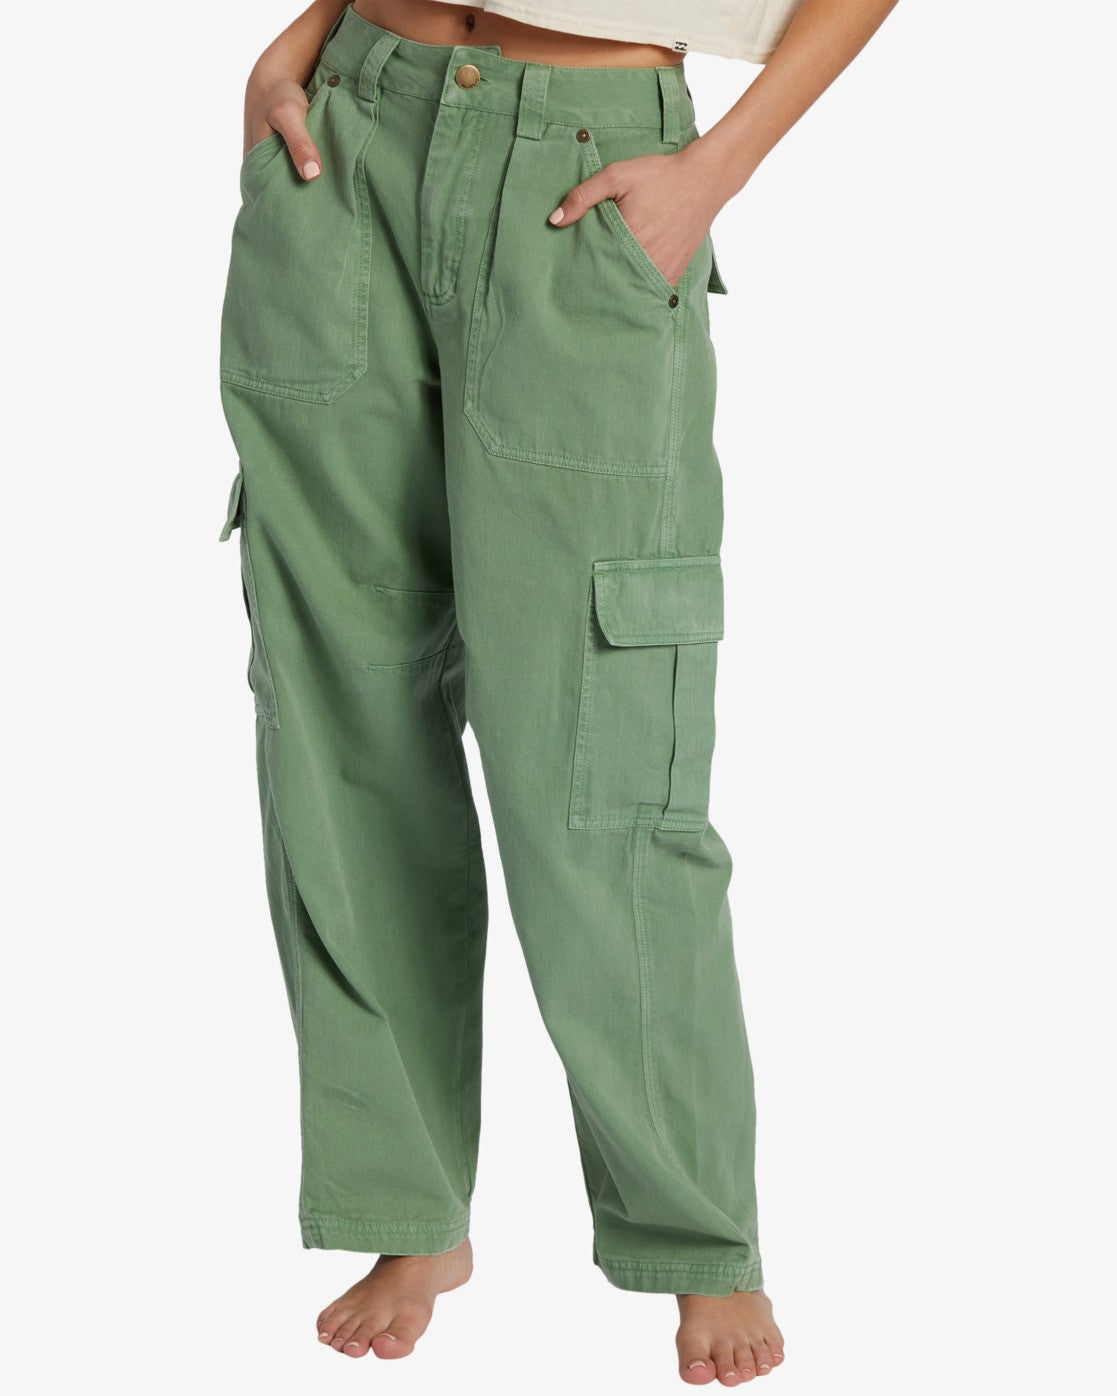 Billabong Women's Jeans Cargo Pockets Relaxed Fit